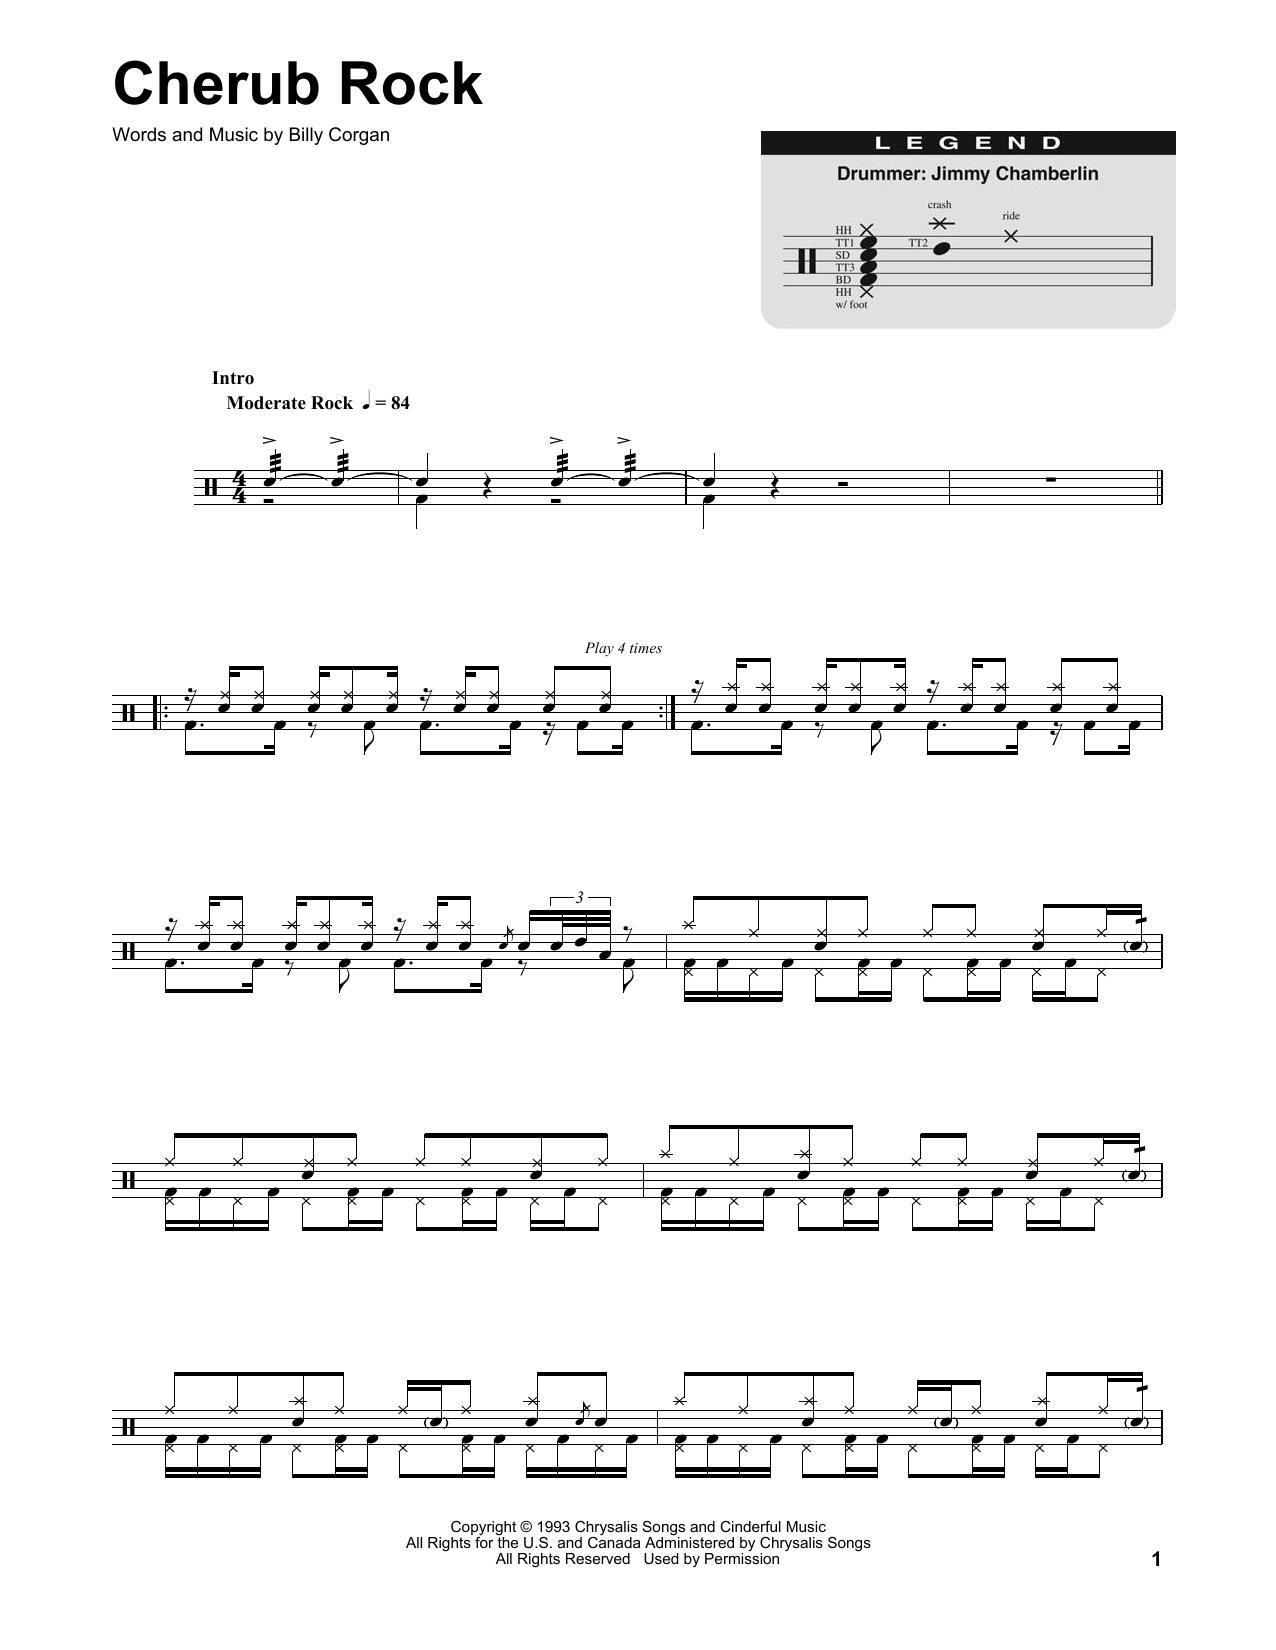 Smashing Pumpkins Cherub Rock Sheet Music Notes & Chords for Drums Transcription - Download or Print PDF